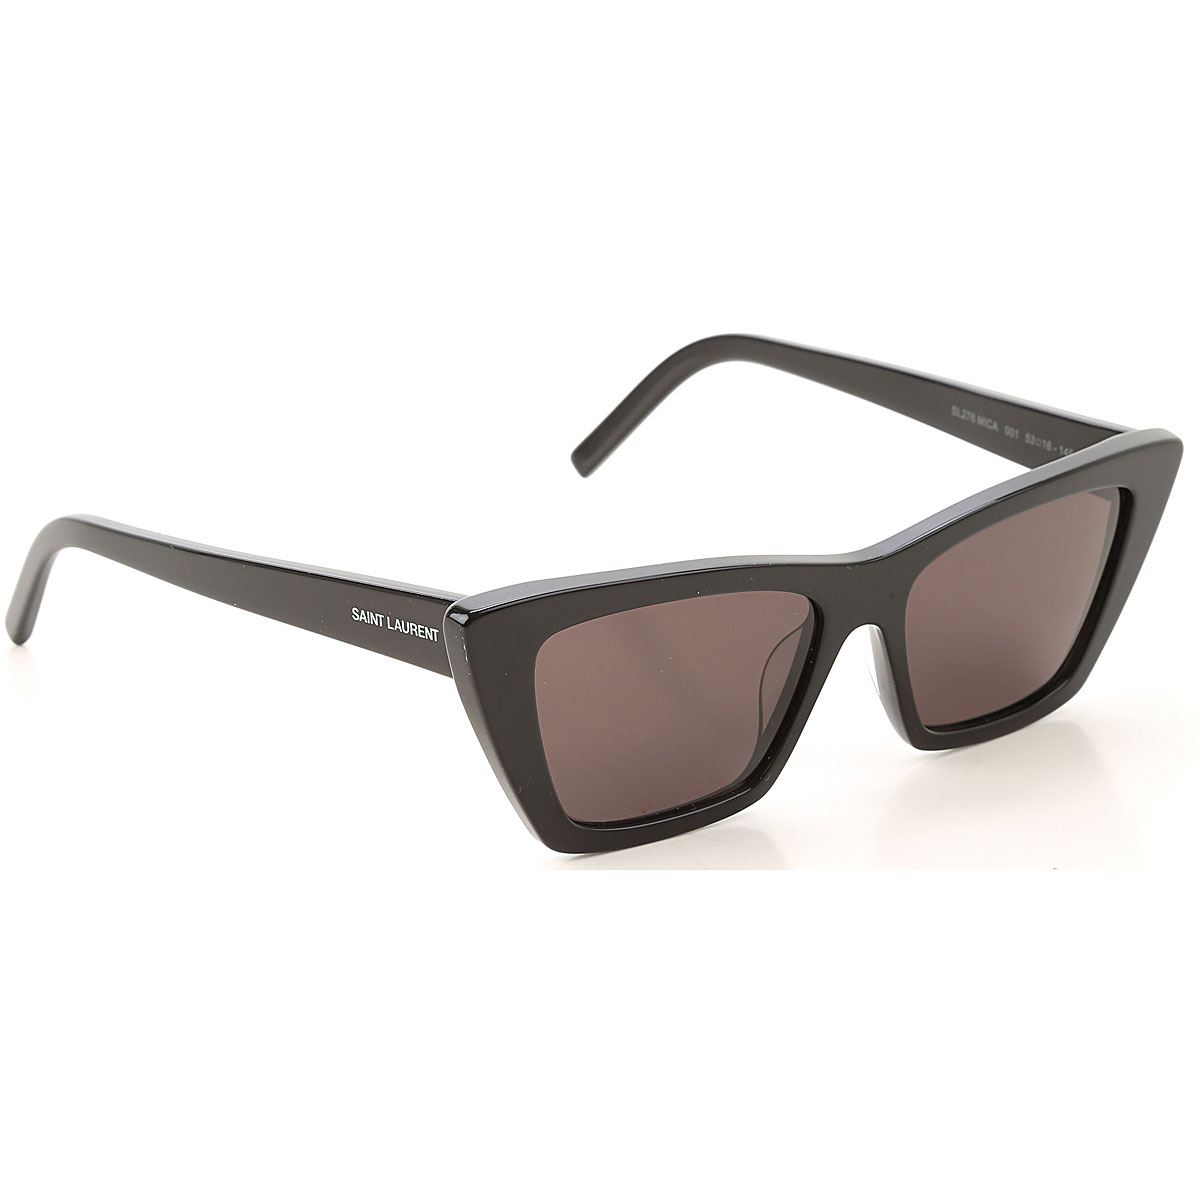 Sunglasses Yves Saint Laurent, Style code: sl276-mica-001